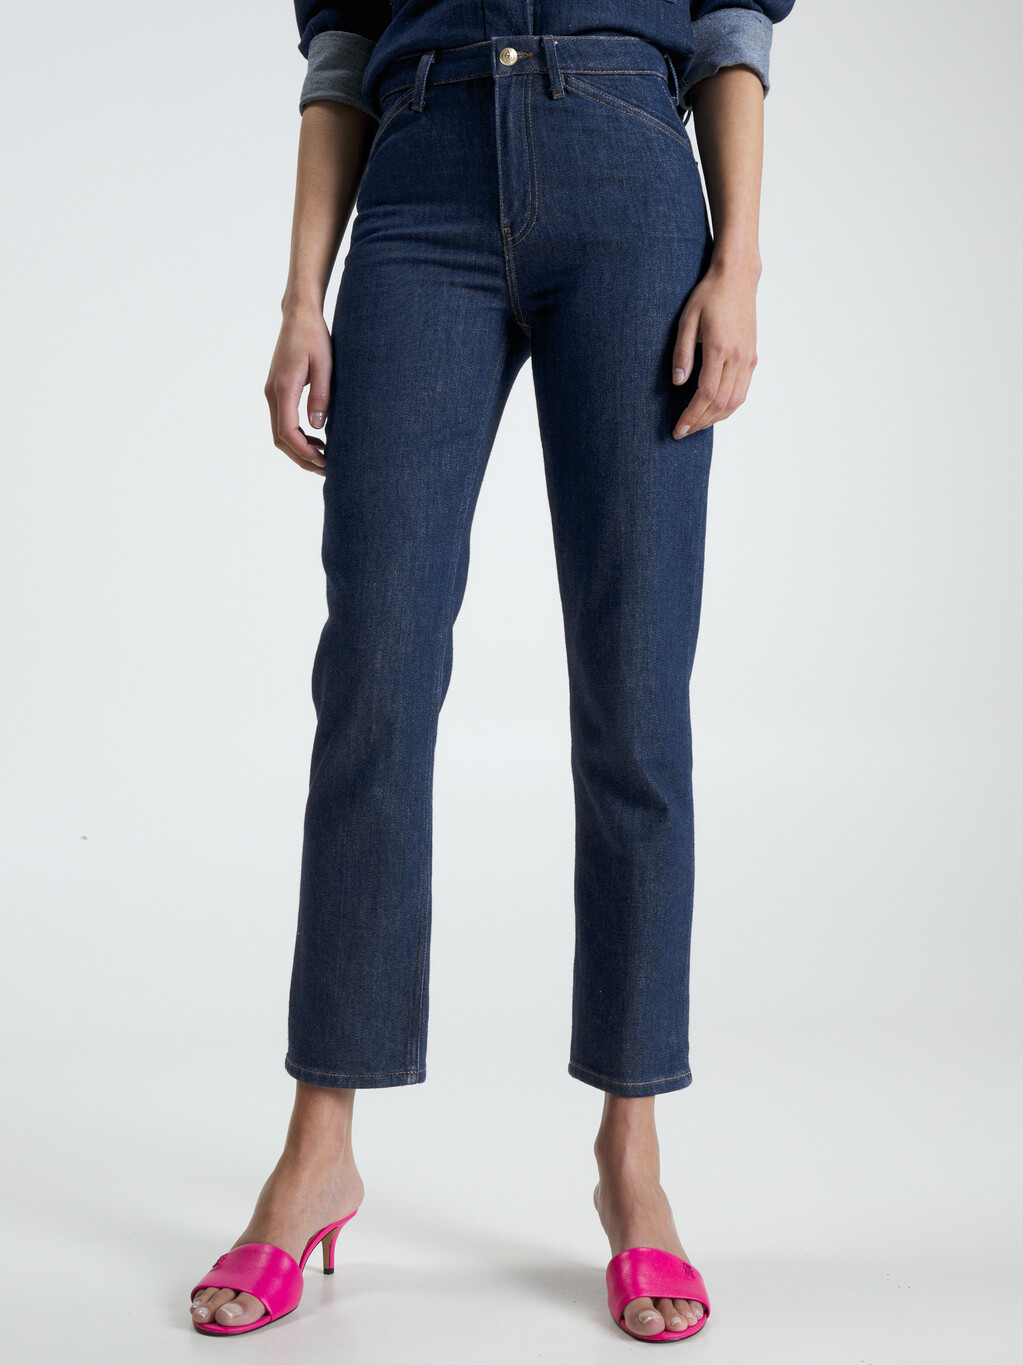 tommy hilfiger women's straight leg jeans